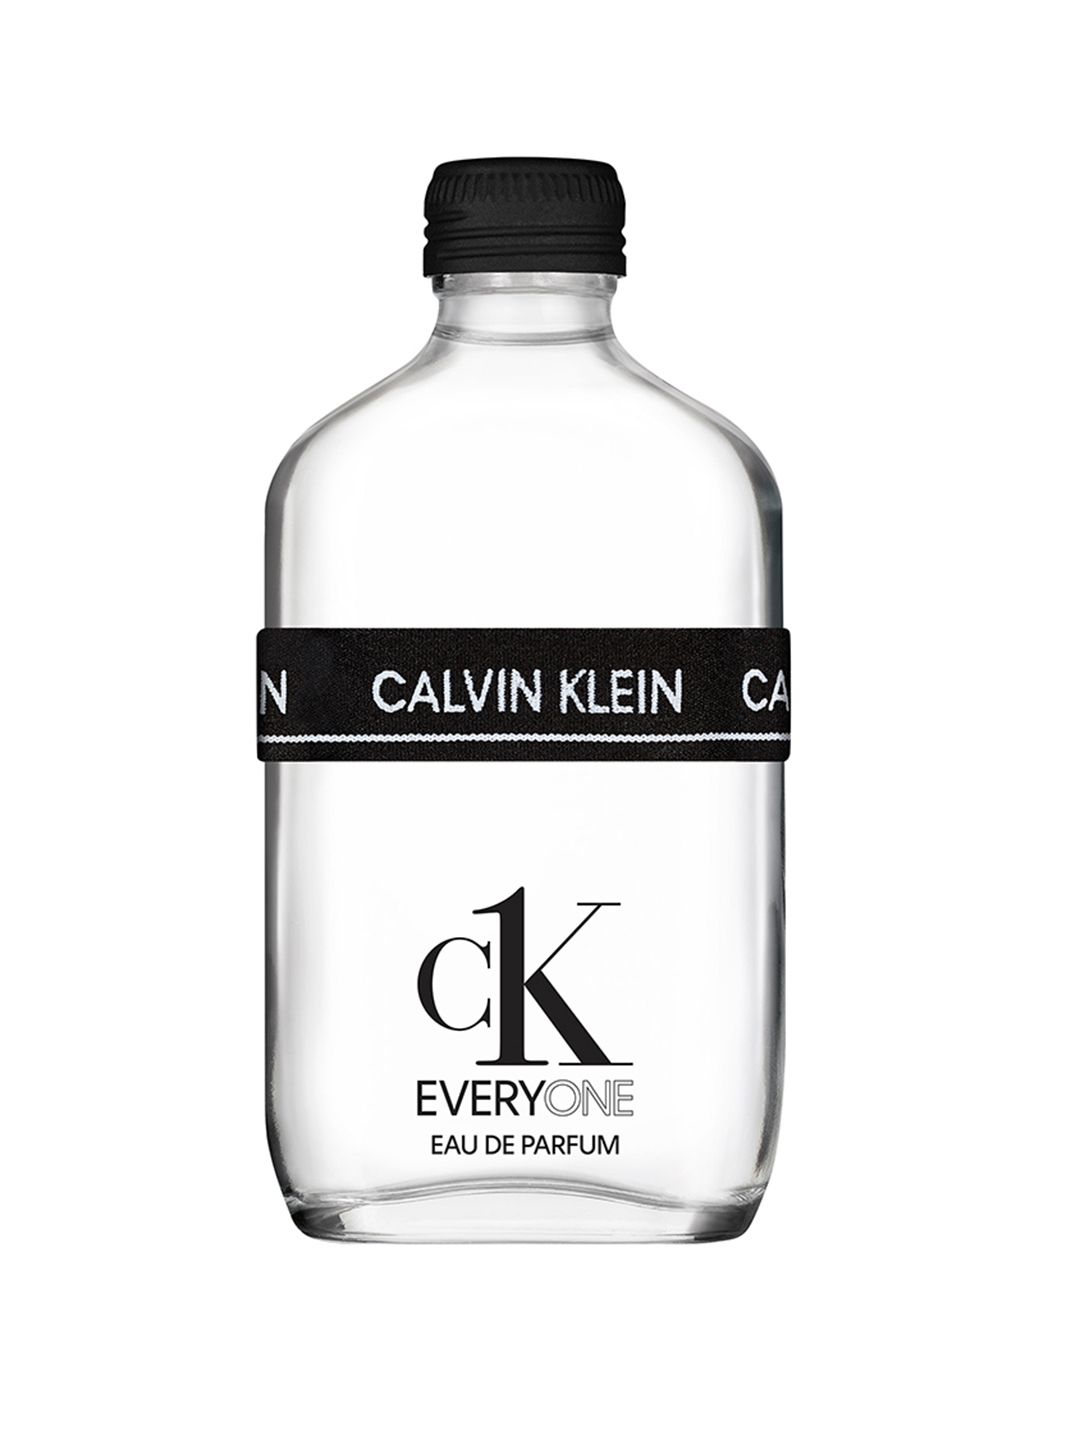 Calvin Klein CK Everyone Eau de Parfum - 200 ml - Price History